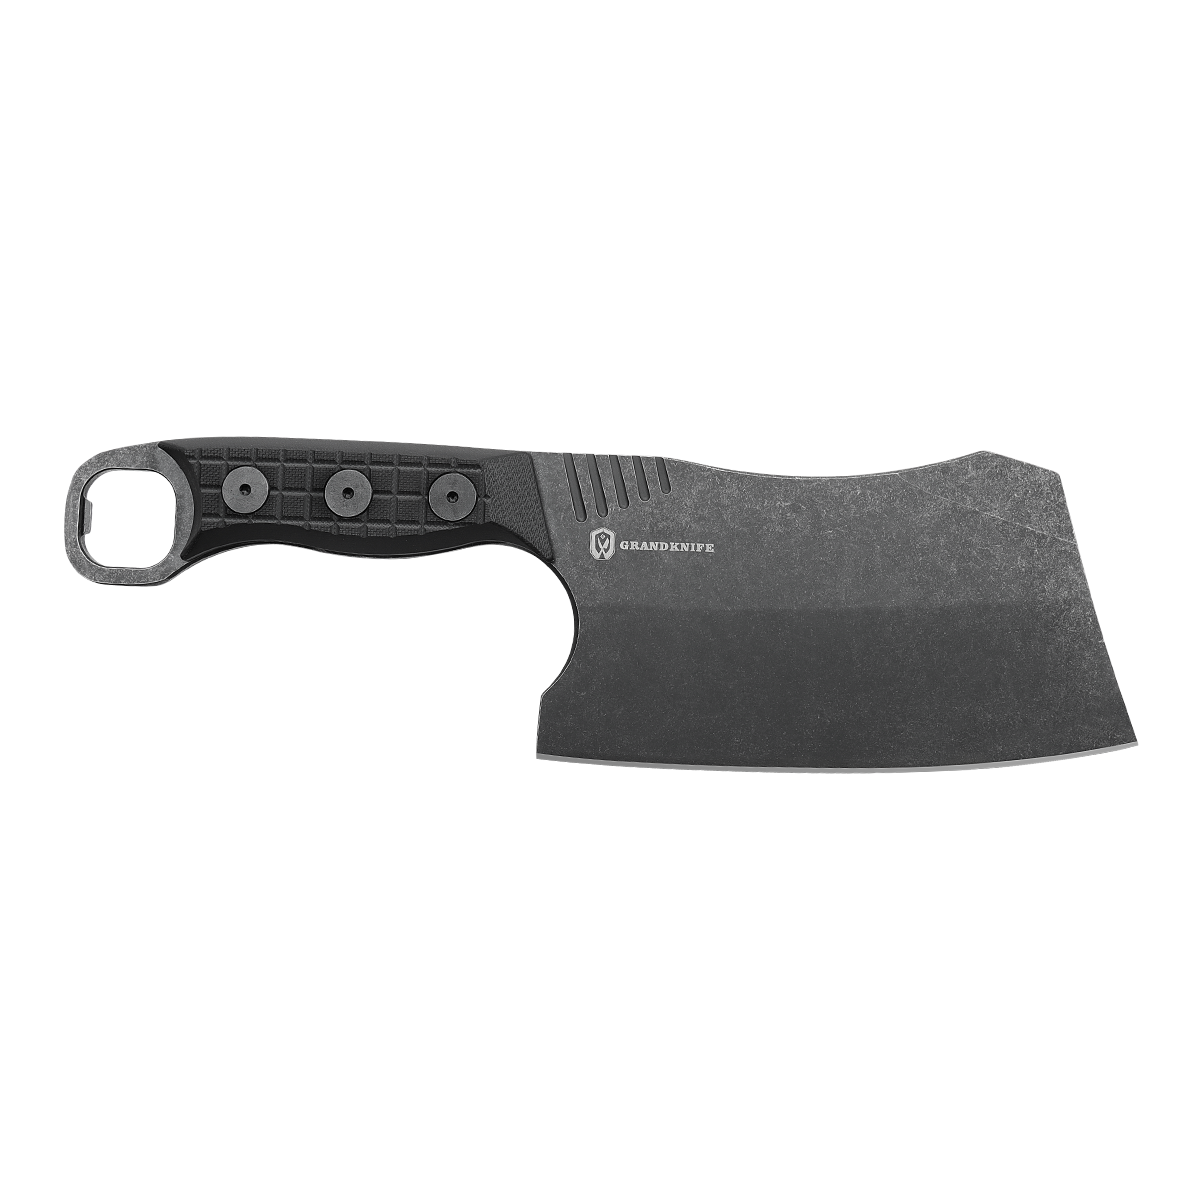 Minibarbar slicing and dicing indoors/outdoors kitchen knife